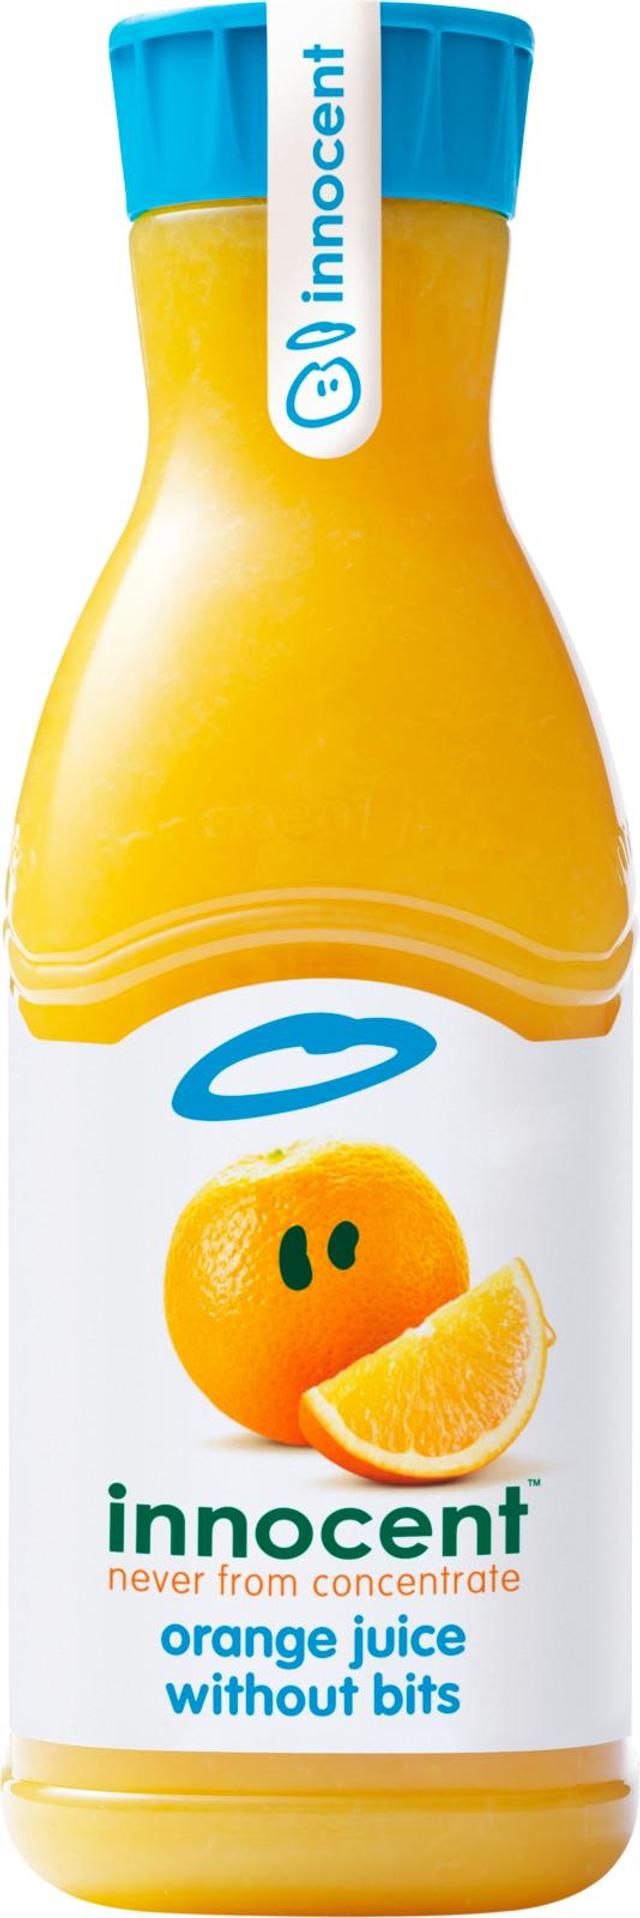 Innocent 900 ml Orange juice without bits